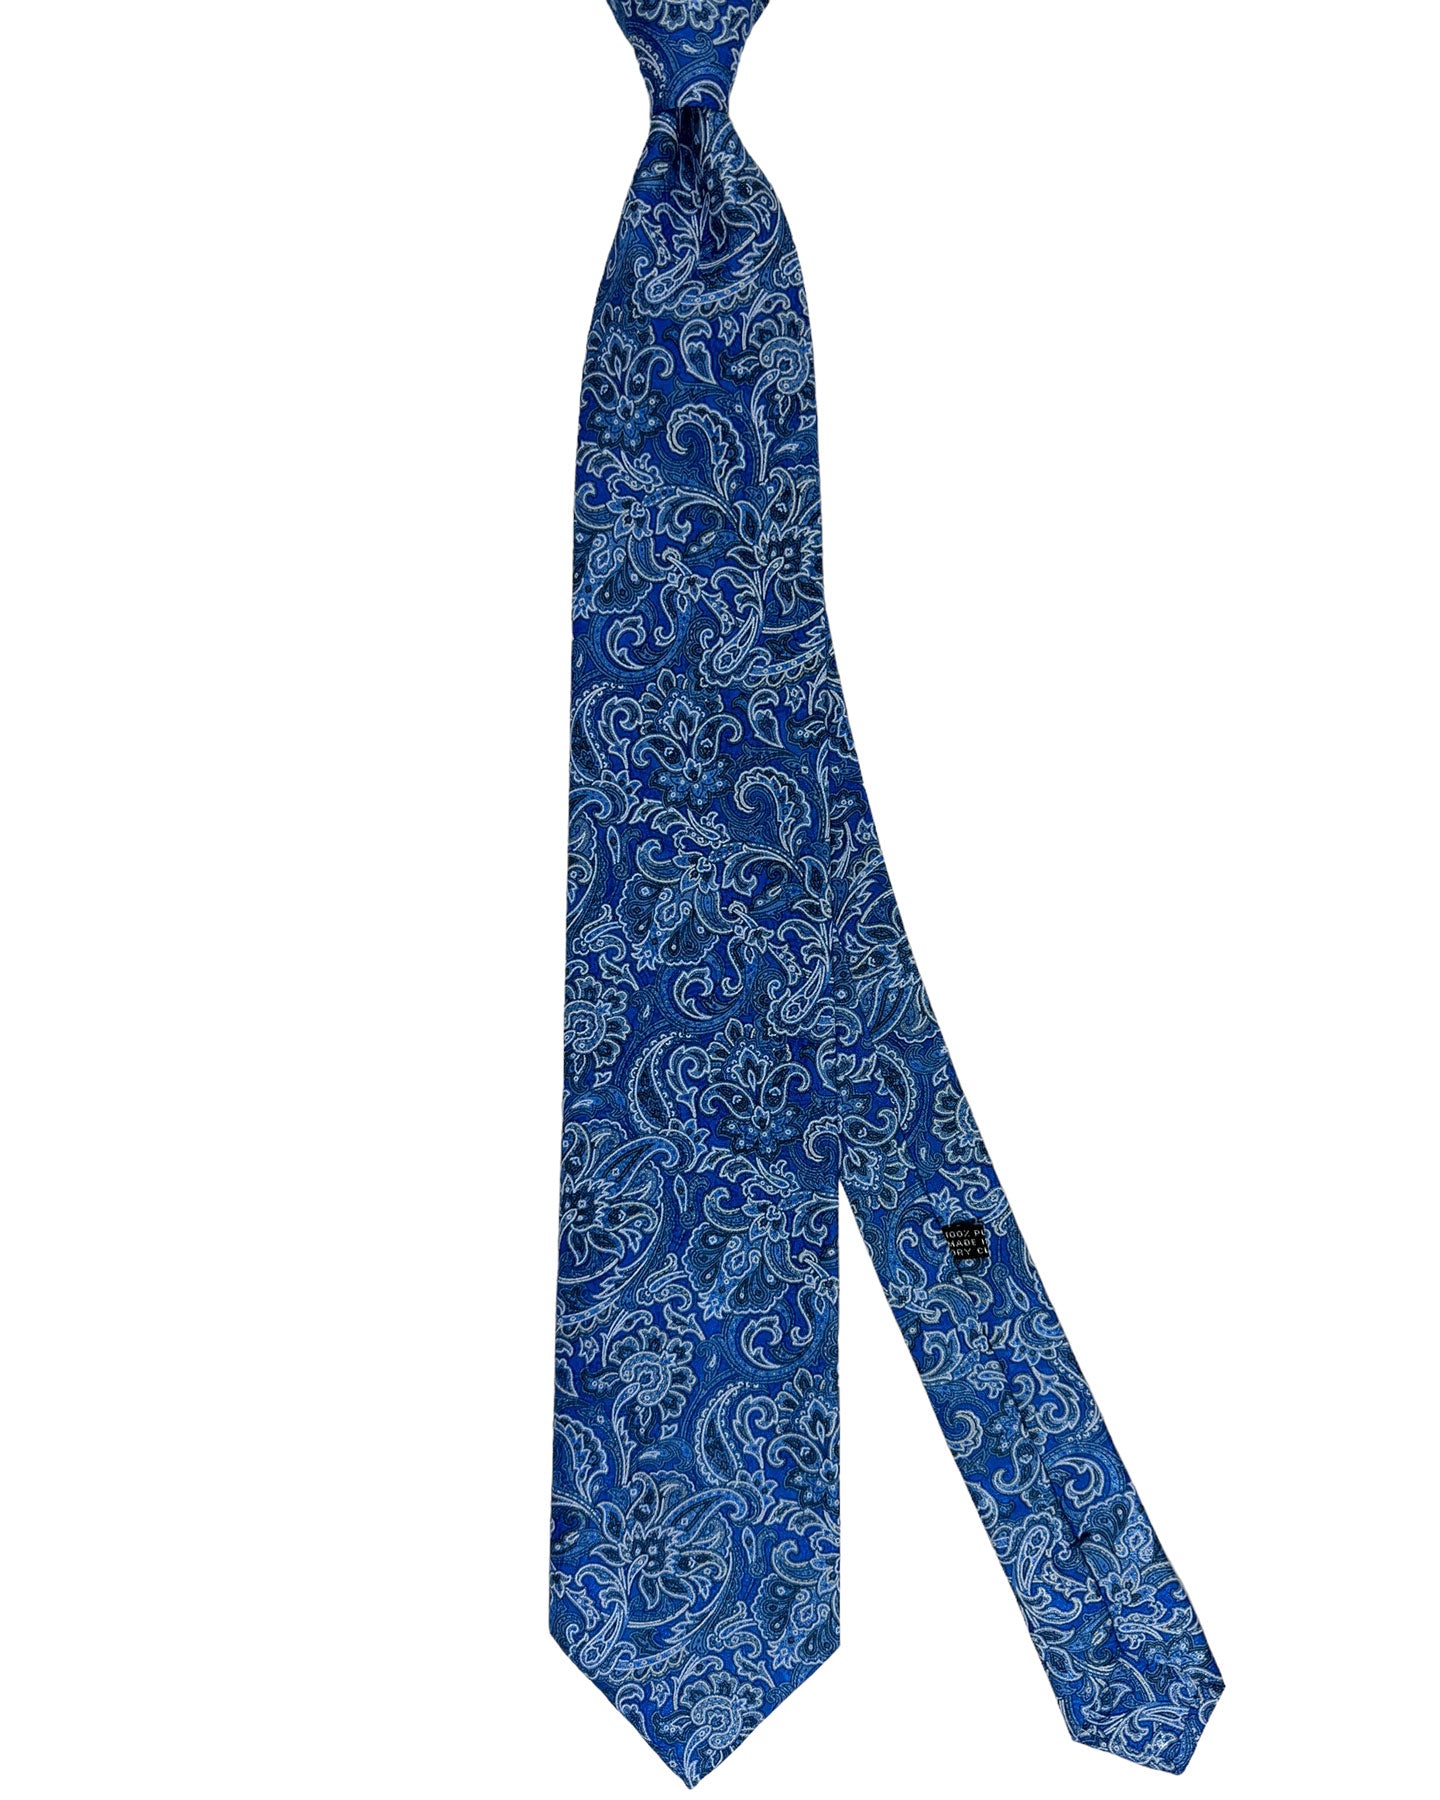 Stefano Ricci Silk Tie Navy Paisley Design